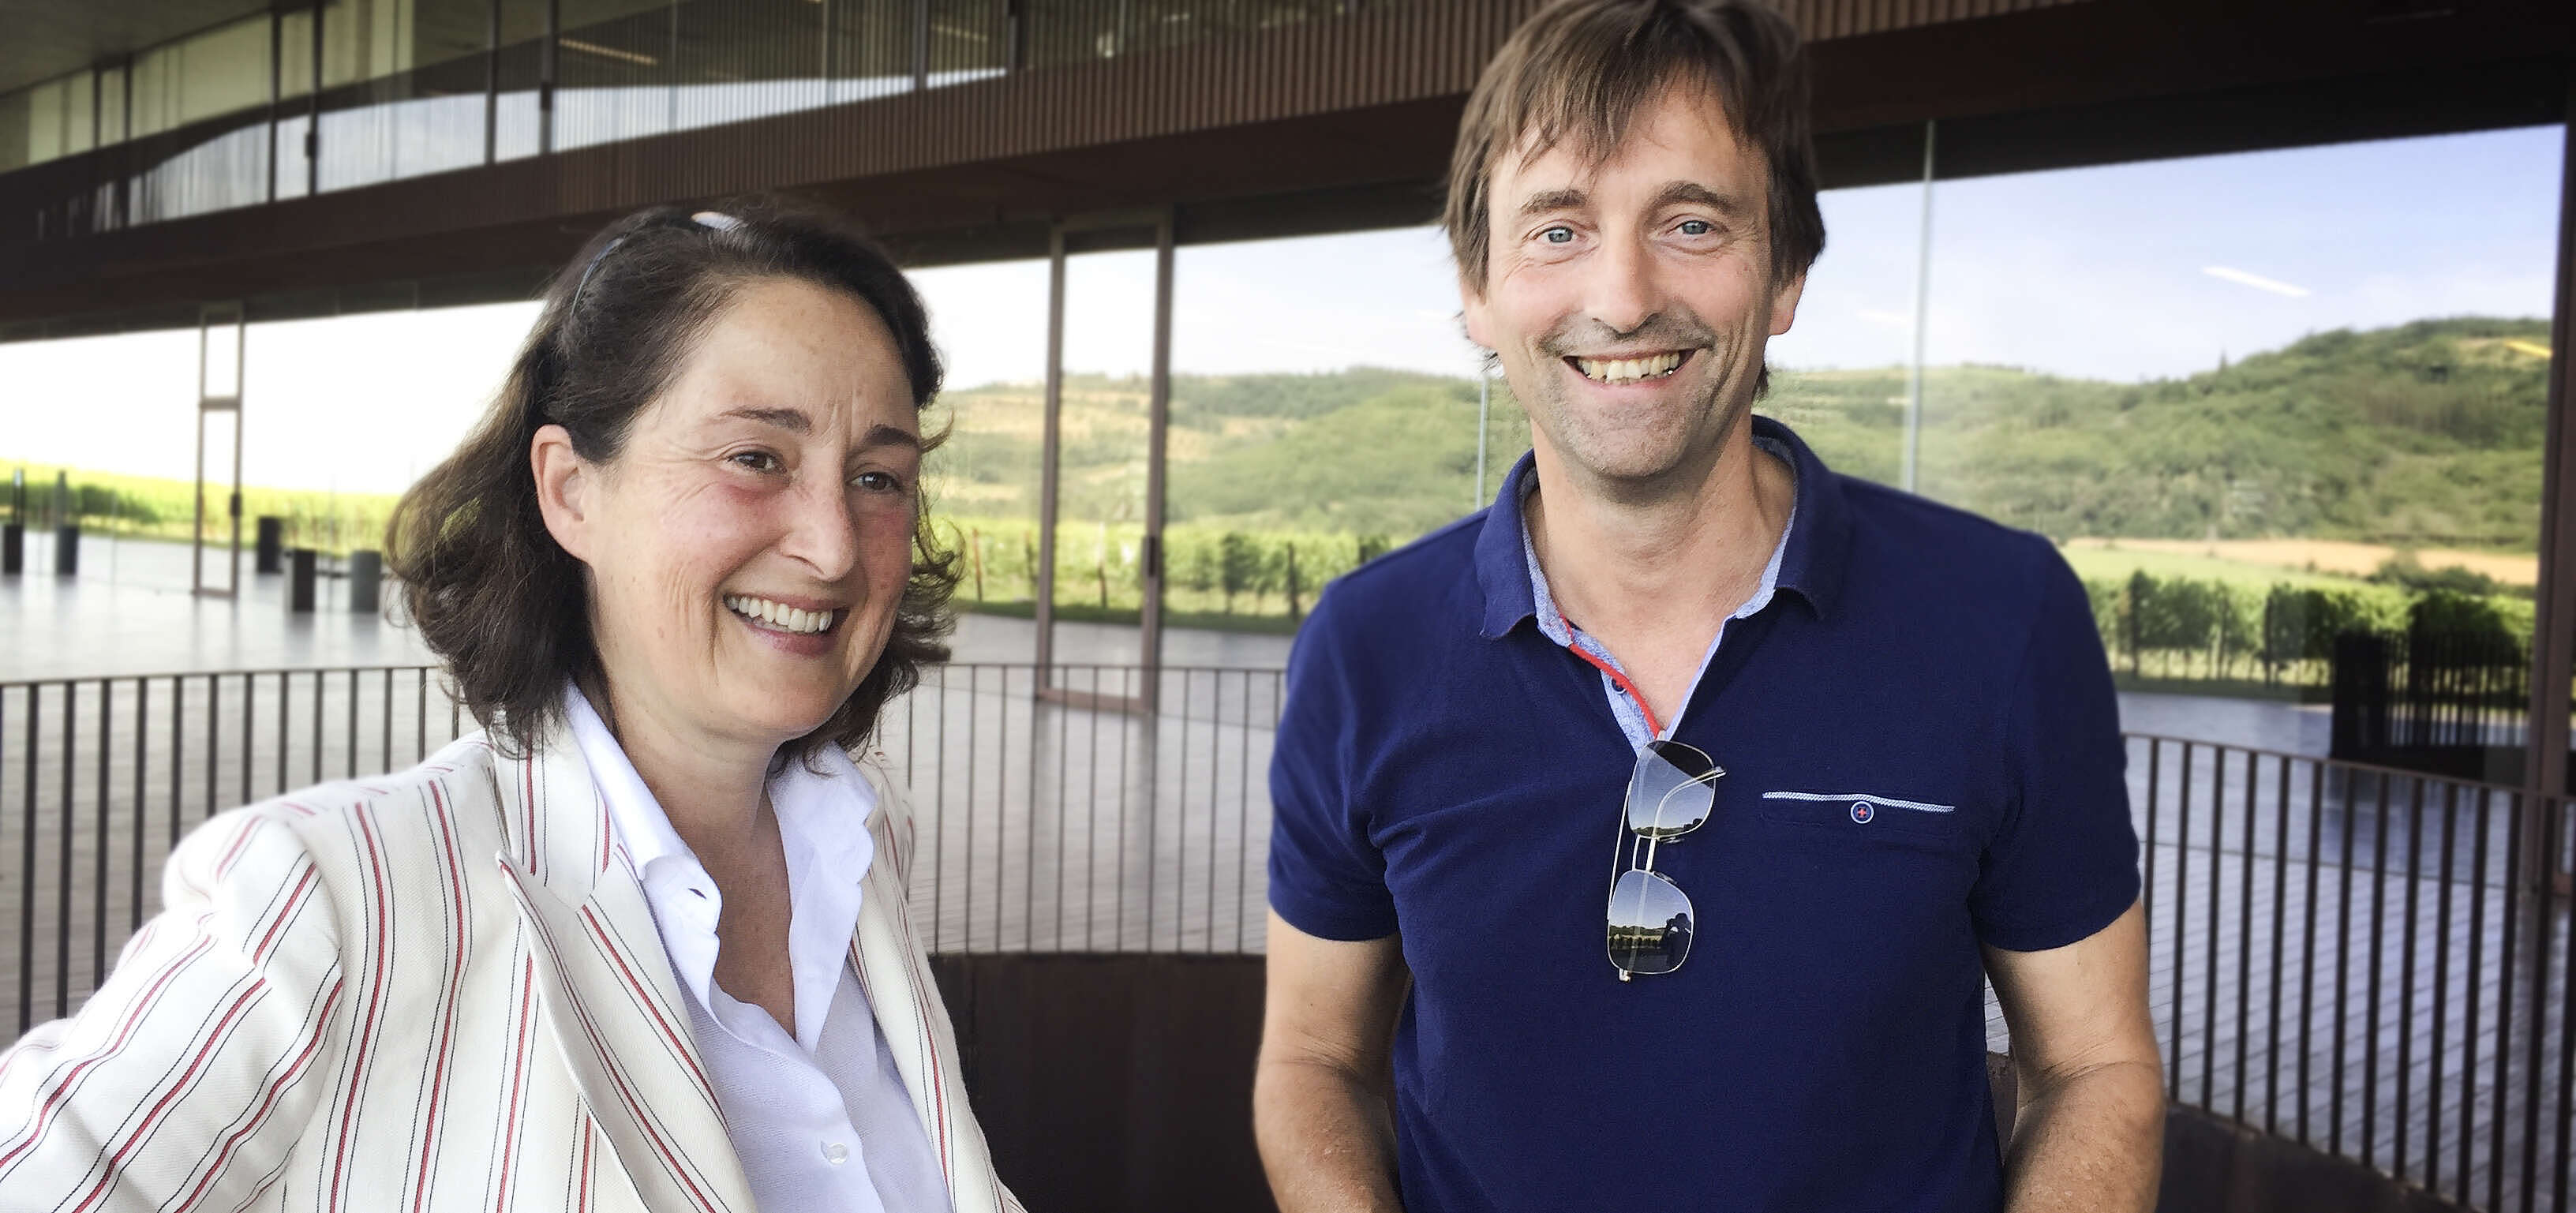 Albiera Antinori, president of Marchese Antinori, in the interview on Chianti Classico, Steffen Maus met her in new winery Antinori in Chianti Classico